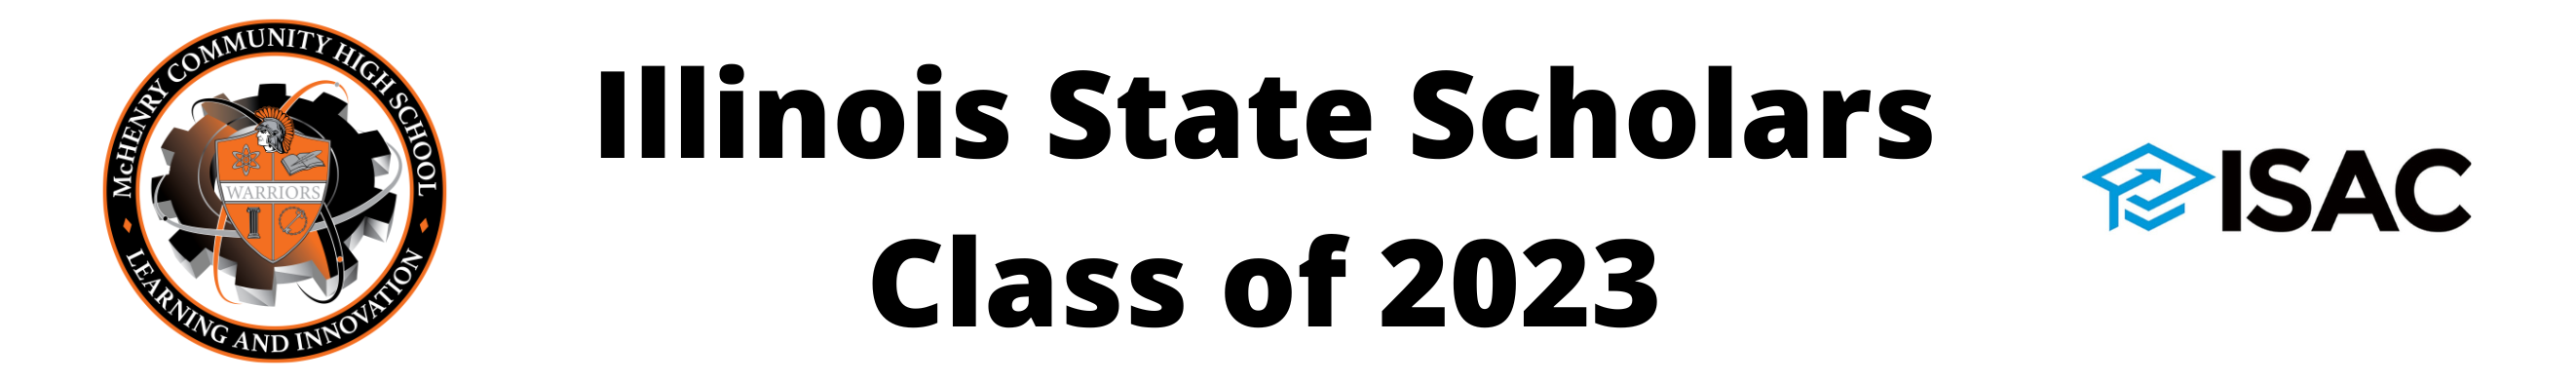 Illinois State Scholars Class of 2023